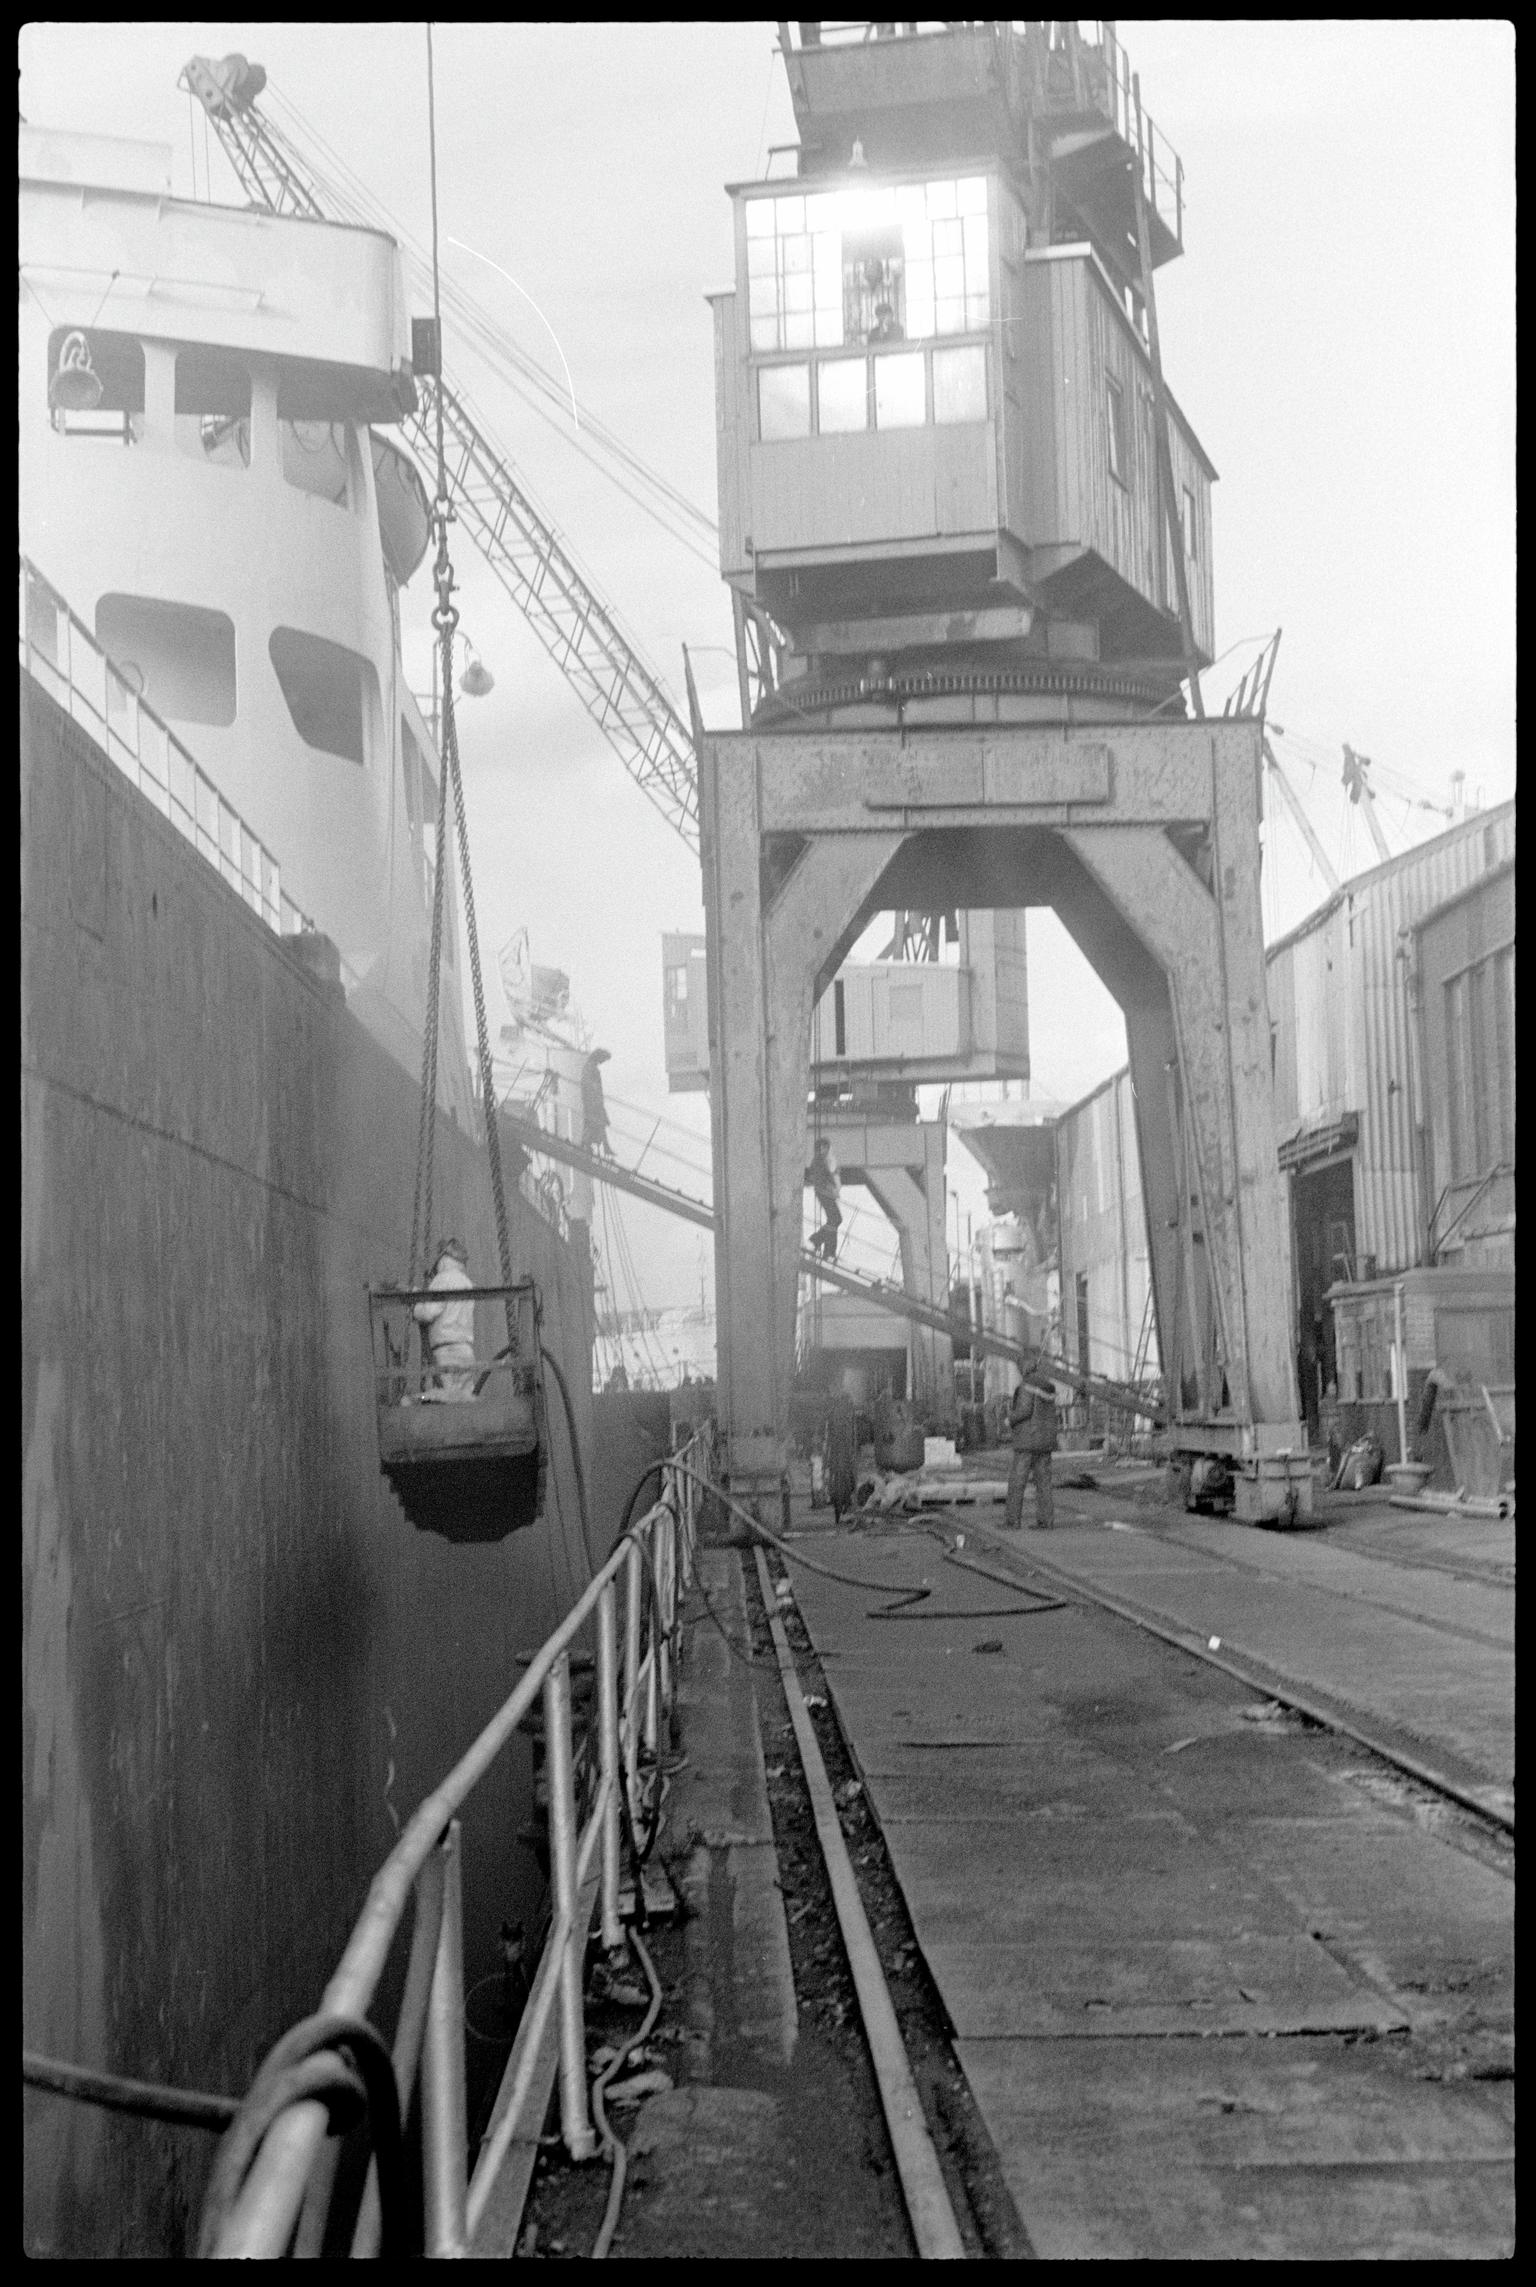 Cardiff Docks, negative